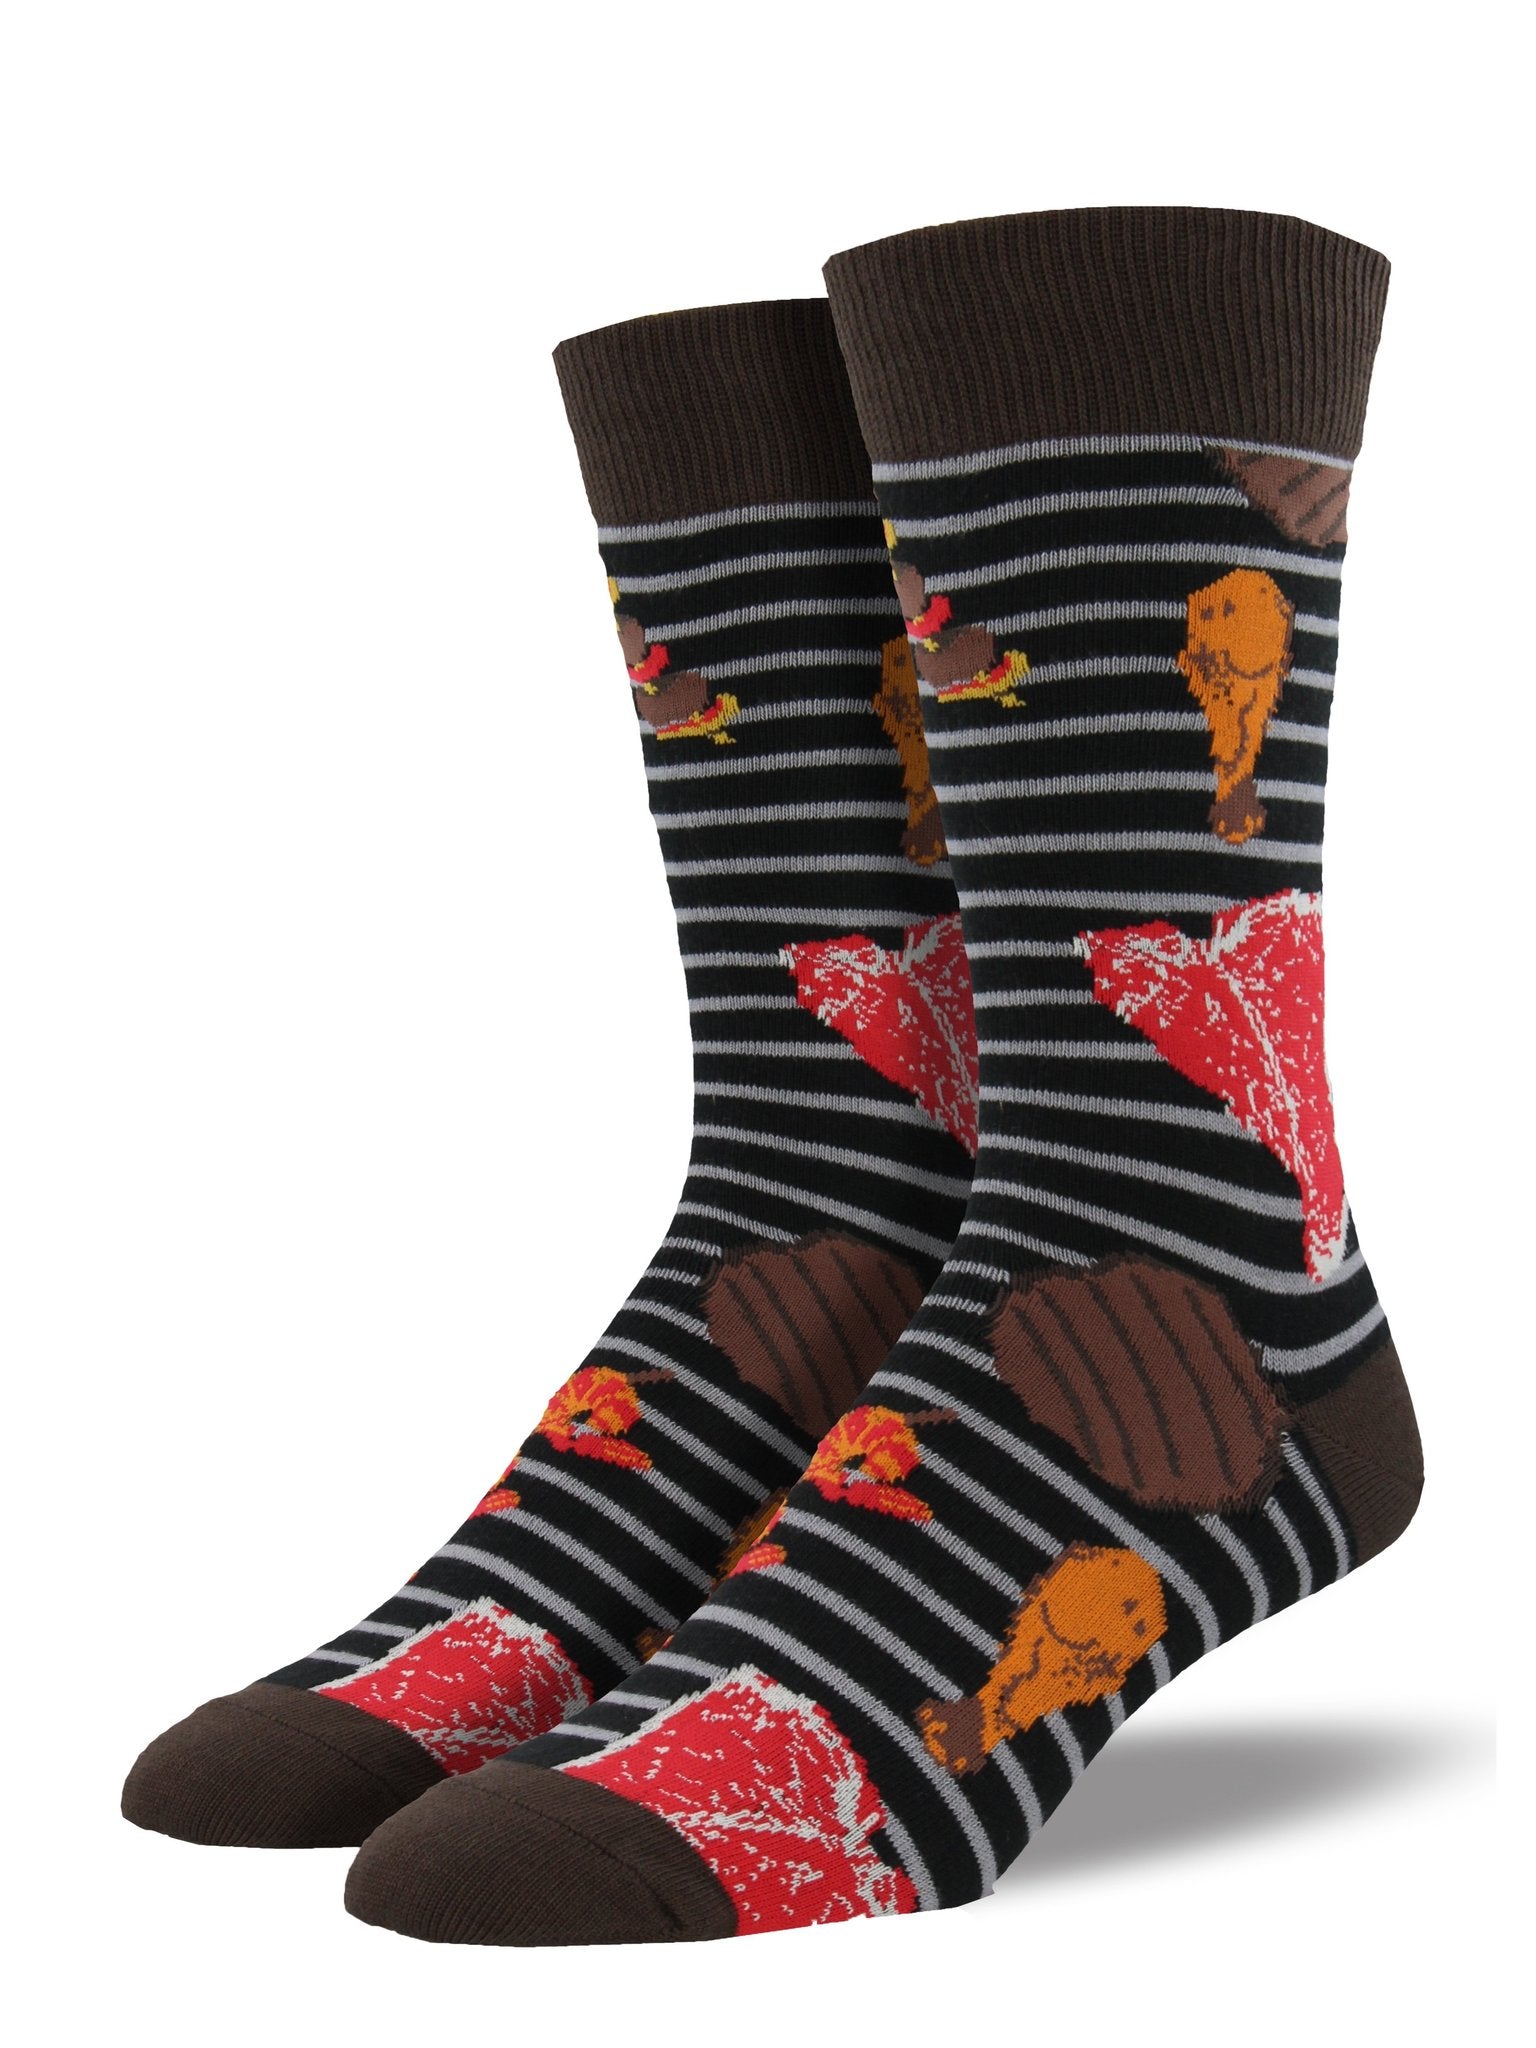 Grillin & Chillin Men's Socks